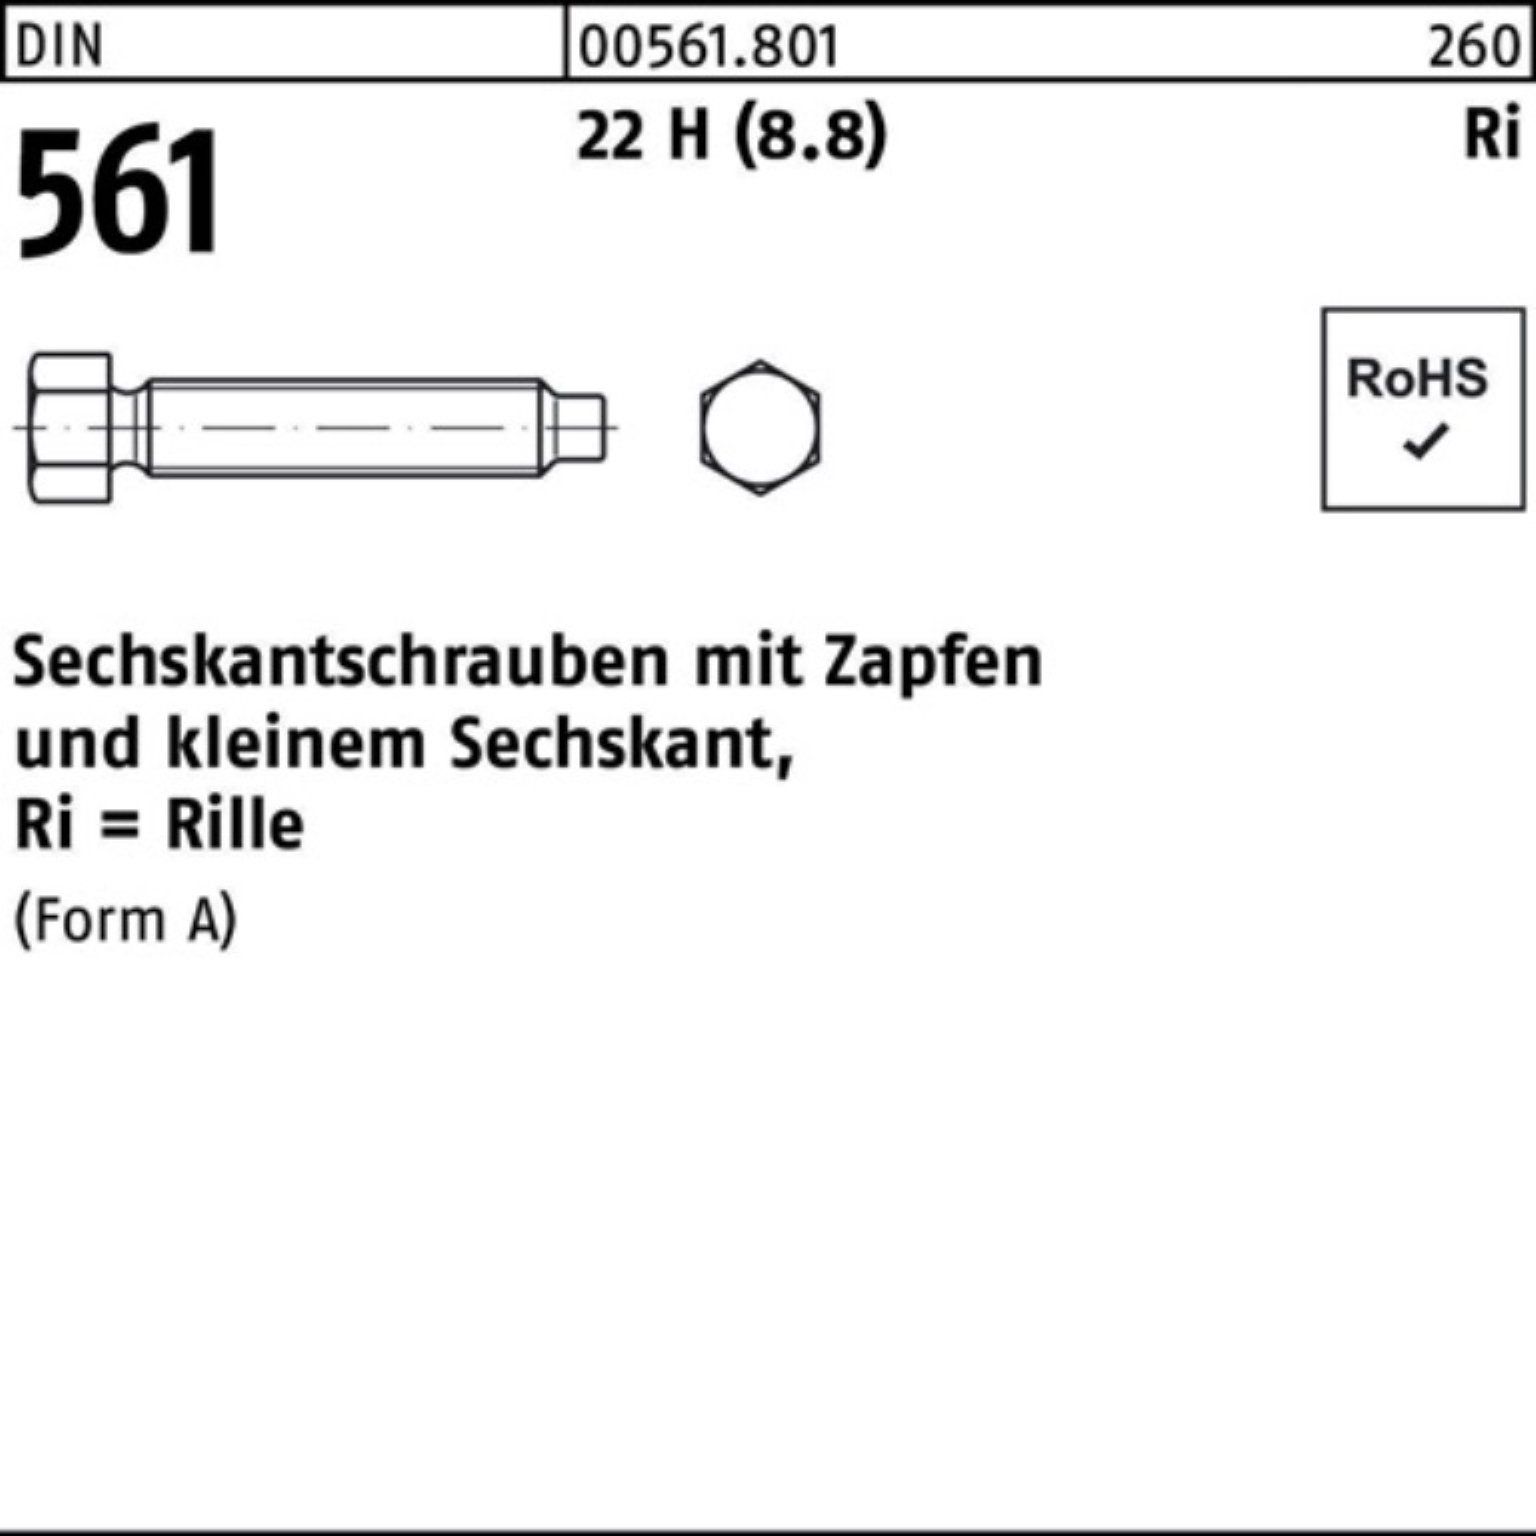 Reyher Sechskantschraube 100er Pack Sechskantschraube DIN 561 Zapfen AM 8x 30 22 H (8.8) 100 St